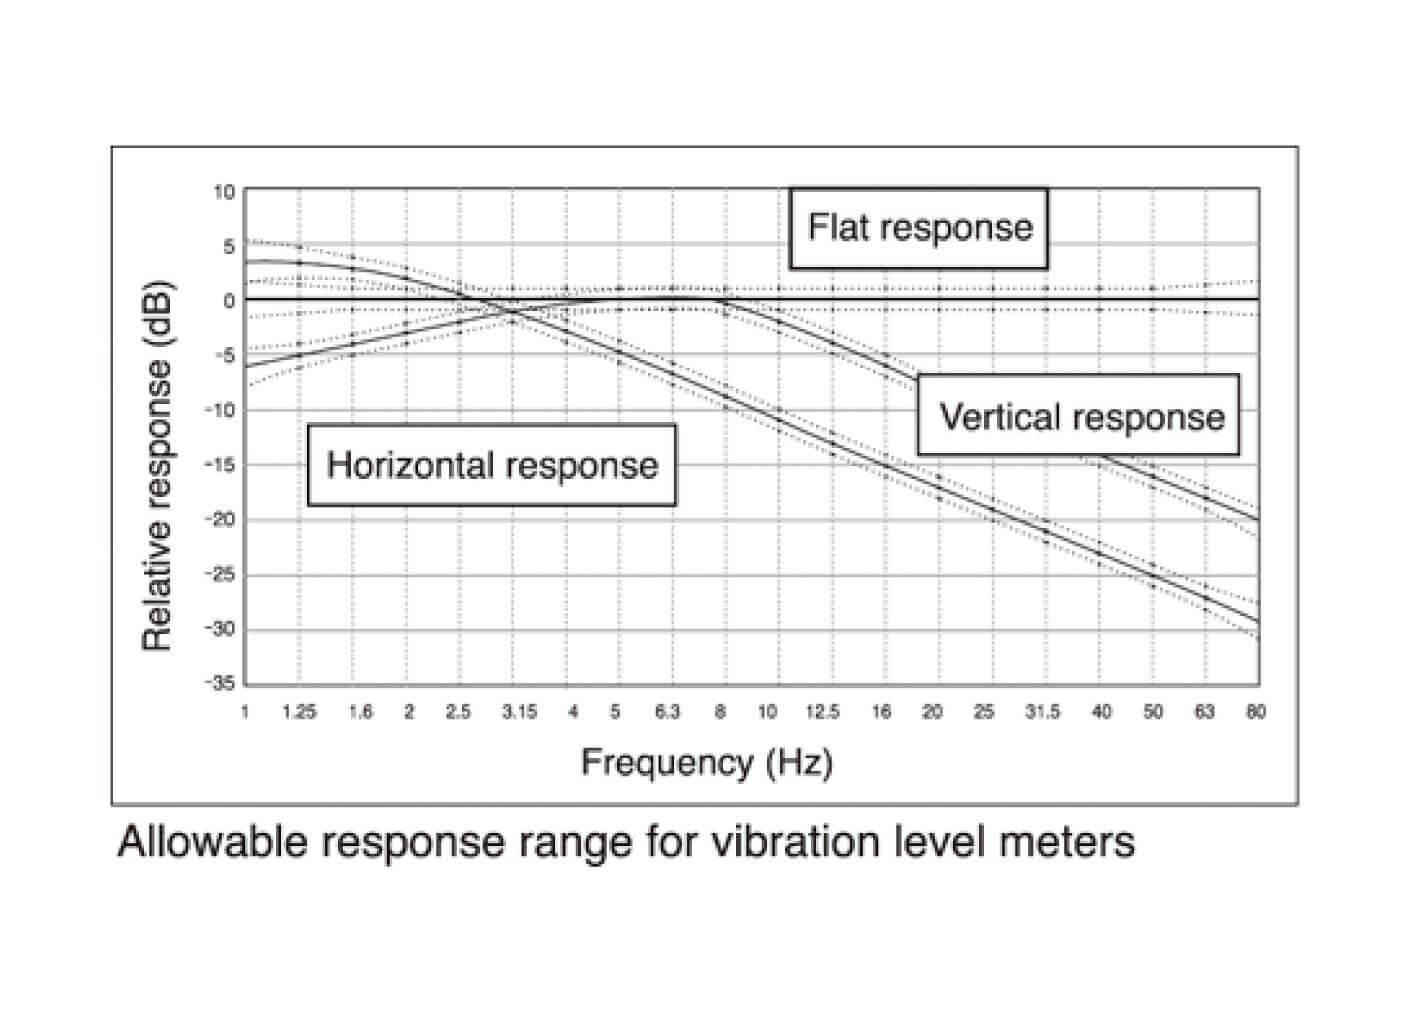 Allowable reponse range for vibration level meters